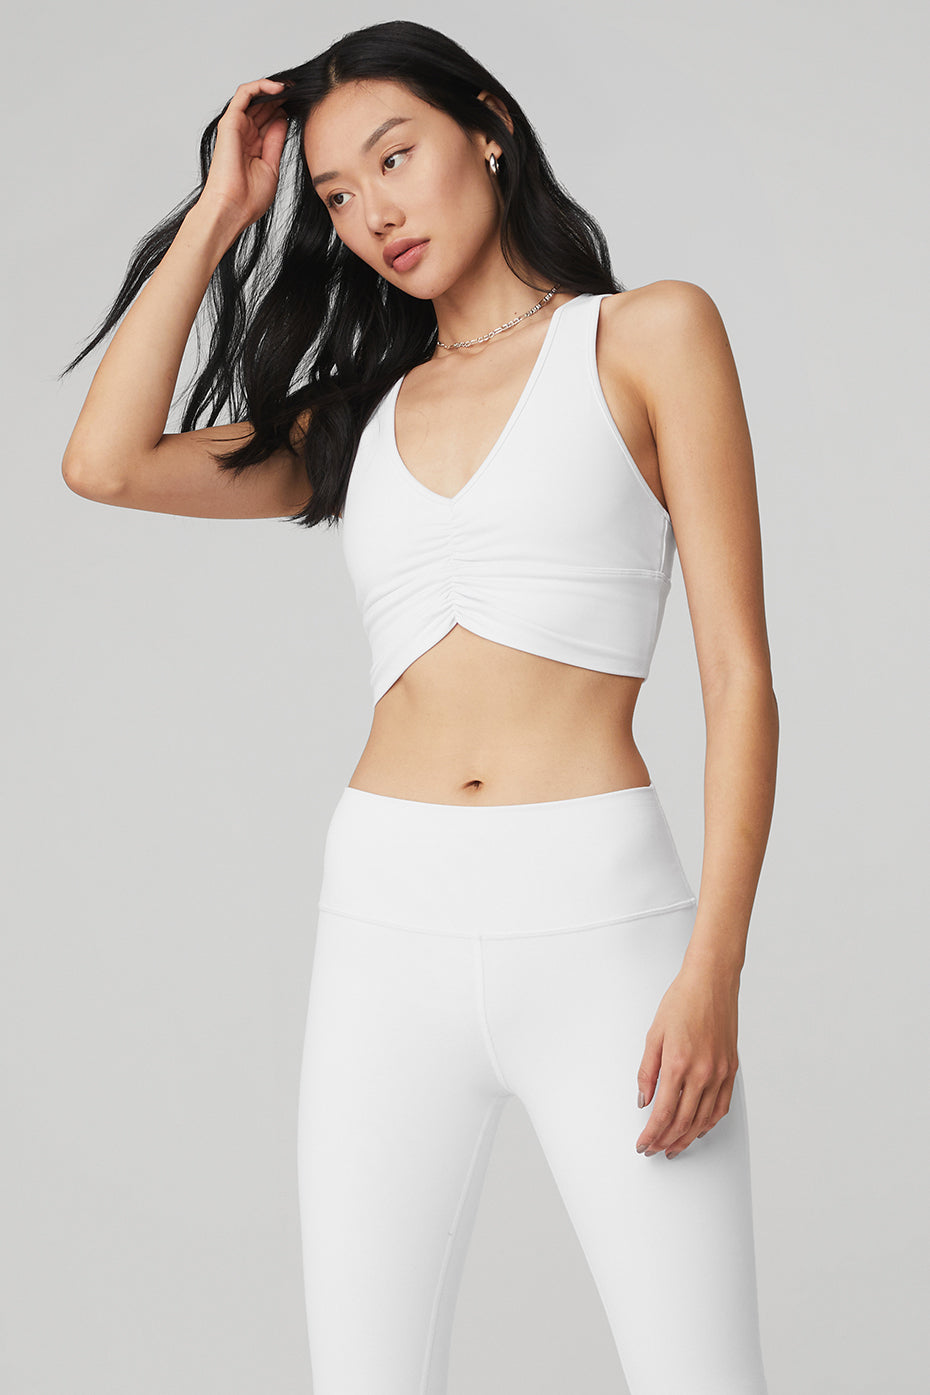 ALO Yoga, Intimates & Sleepwear, Alo Yoga Strappy White Mesh Sports Bra  Size Large